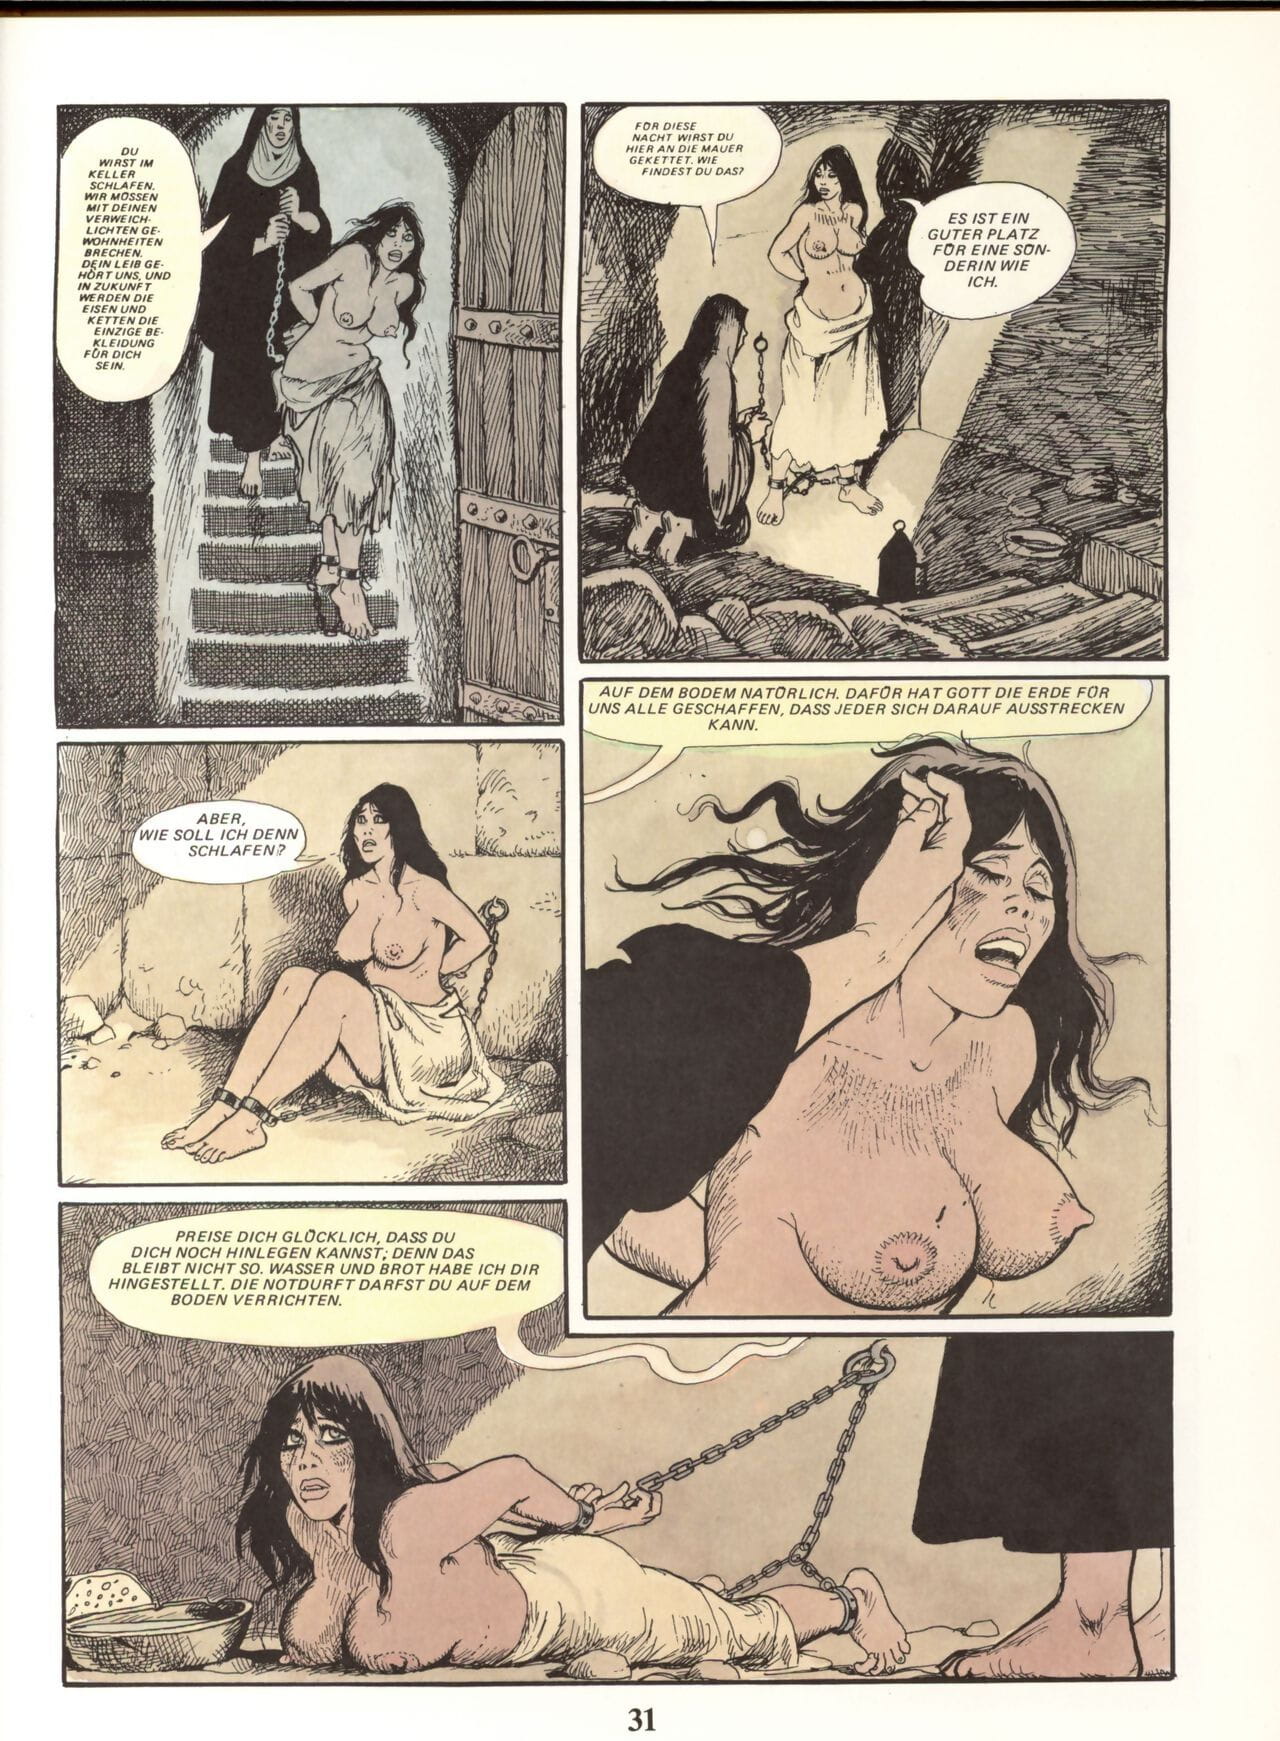 Marie Gabriel De St eutropa #02 część 2 page 1